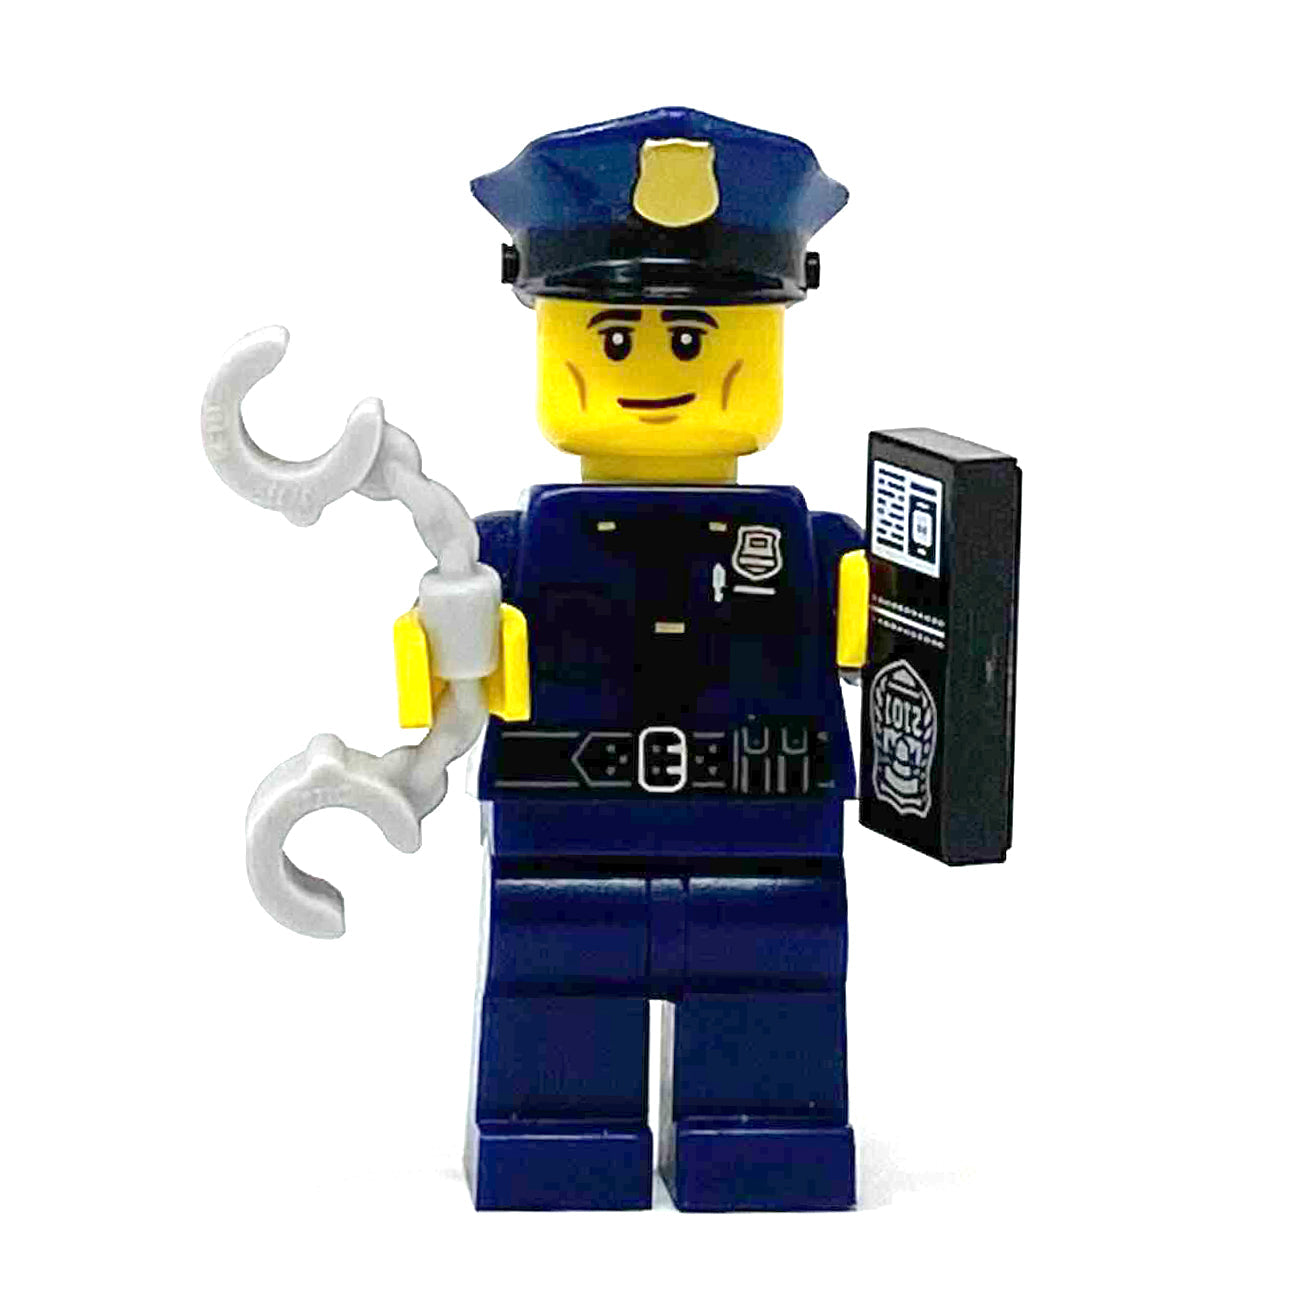 S9 Policeman - Series 9 Minifigure (col134)